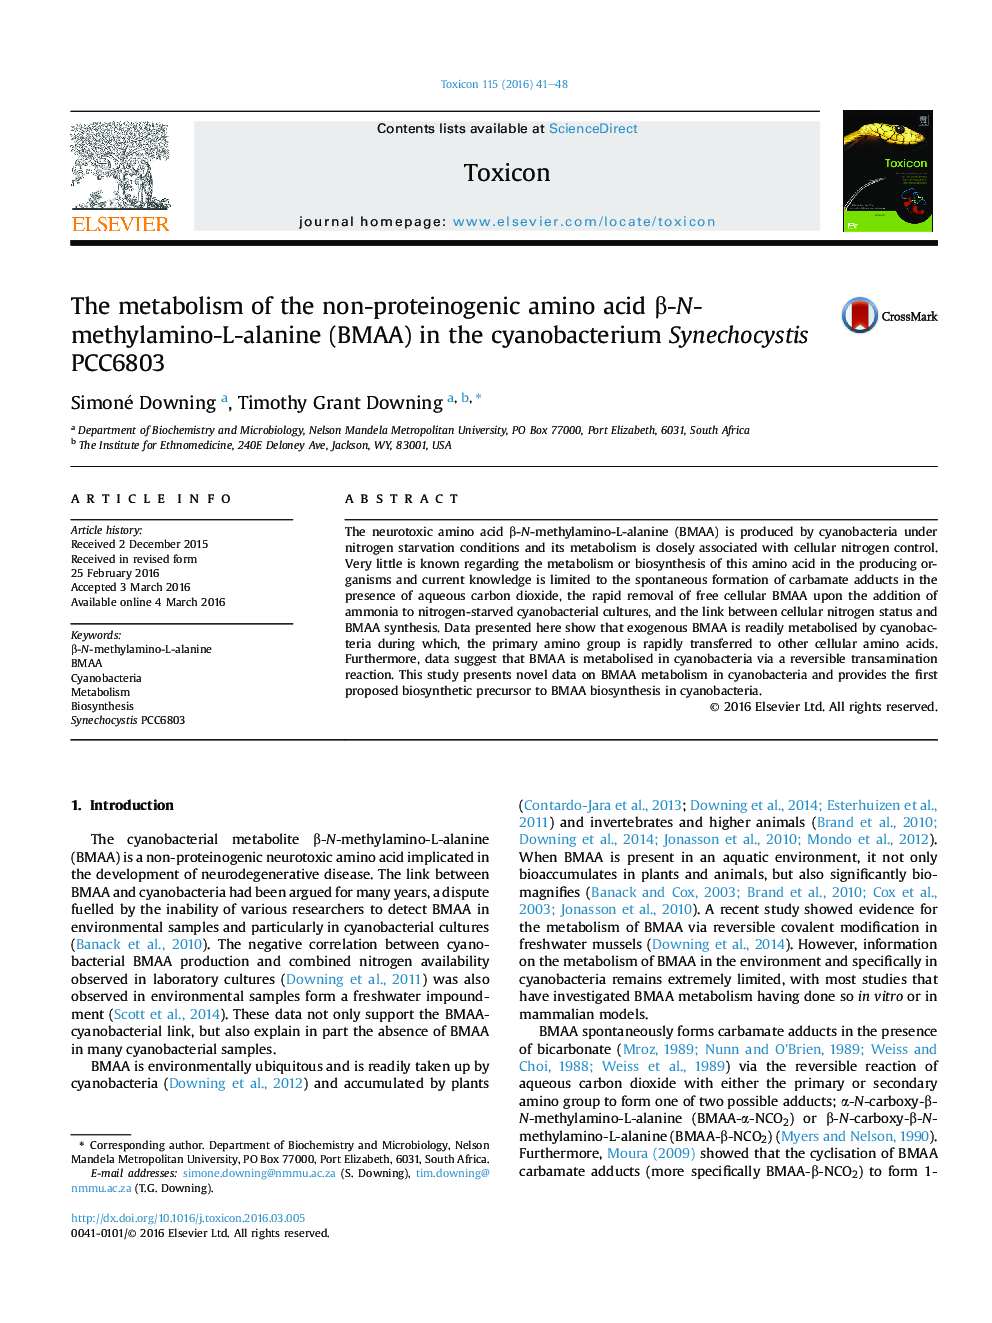 The metabolism of the non-proteinogenic amino acid β-N-methylamino-L-alanine (BMAA) in the cyanobacterium Synechocystis PCC6803